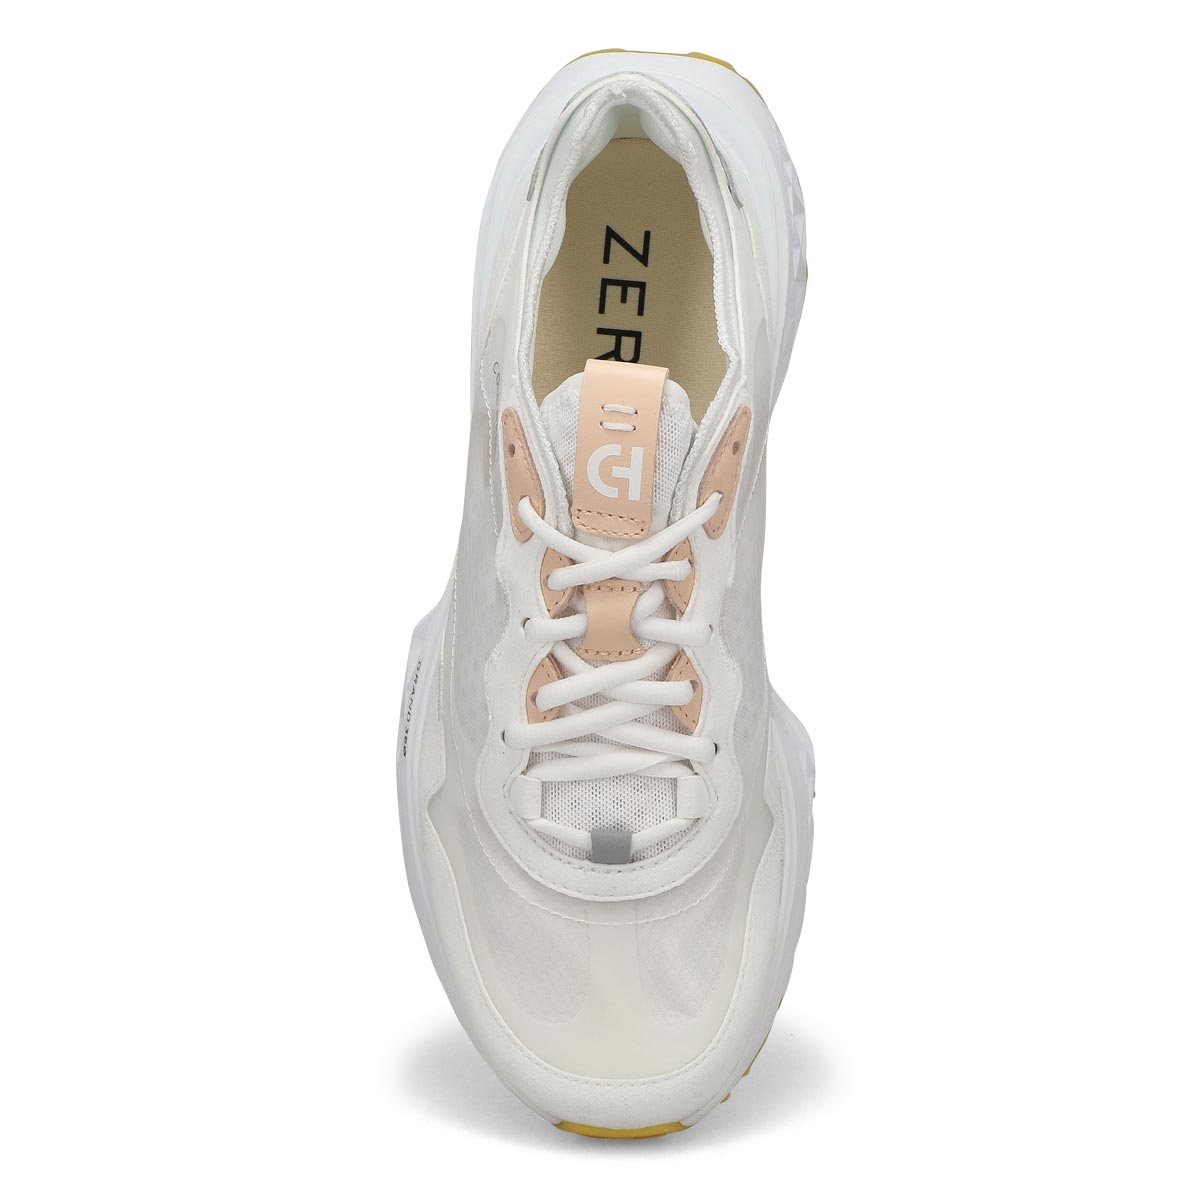 Womens Zero Grand Casual Sneaker - White/Tan